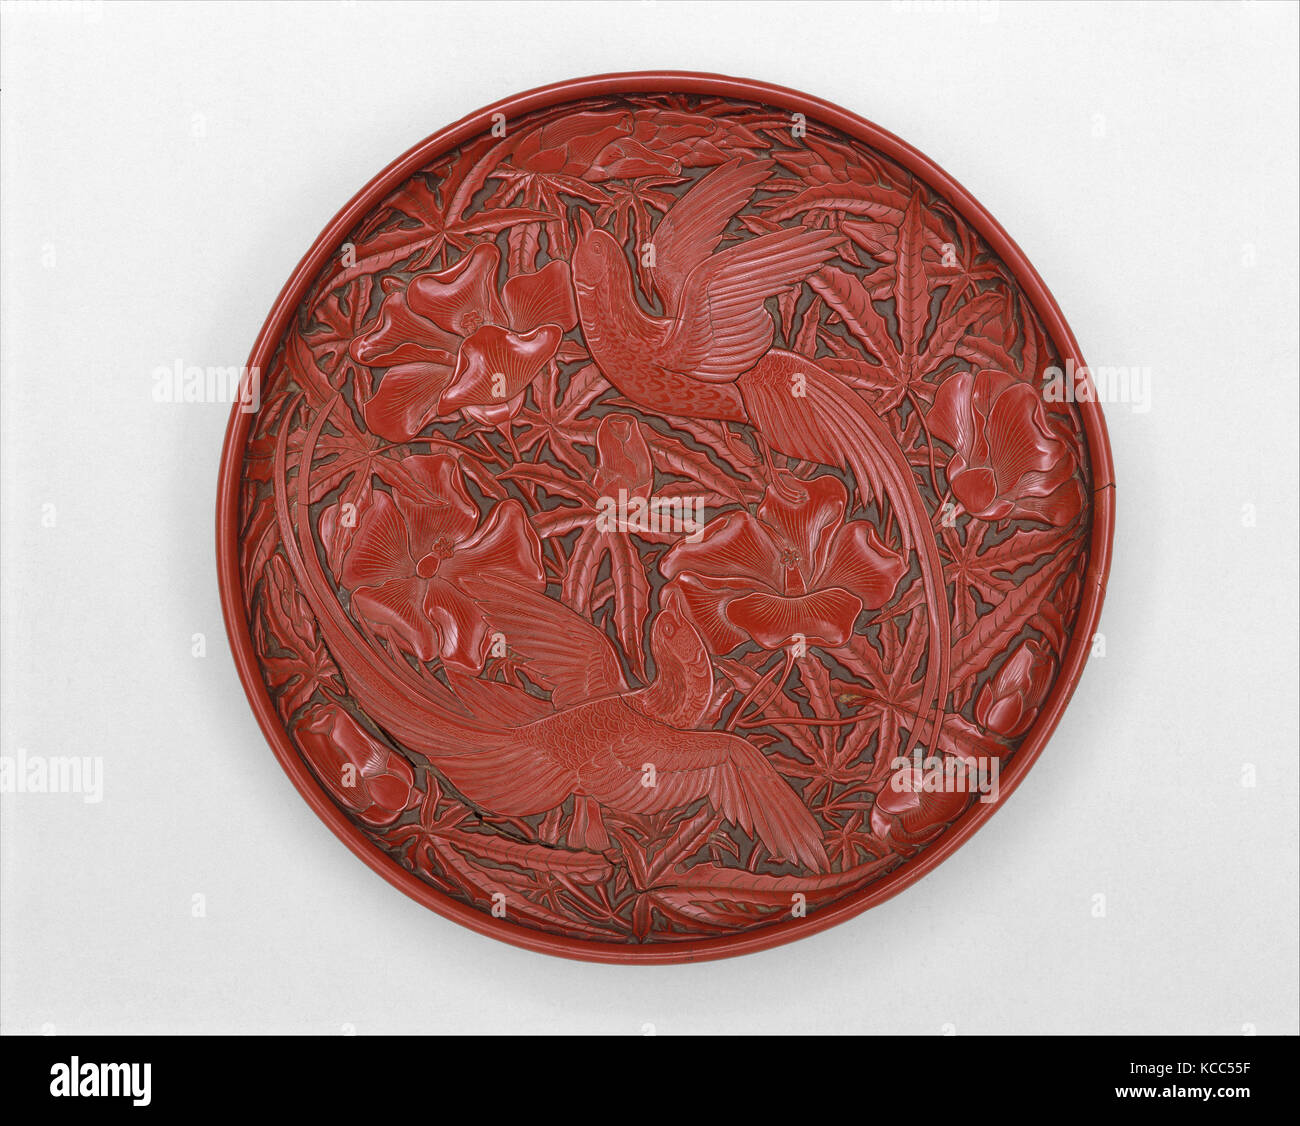 元 剔紅綬帶秋葵紋漆盤, piatto con una lunga coda di uccelli e hollyhock, xiv secolo Foto Stock